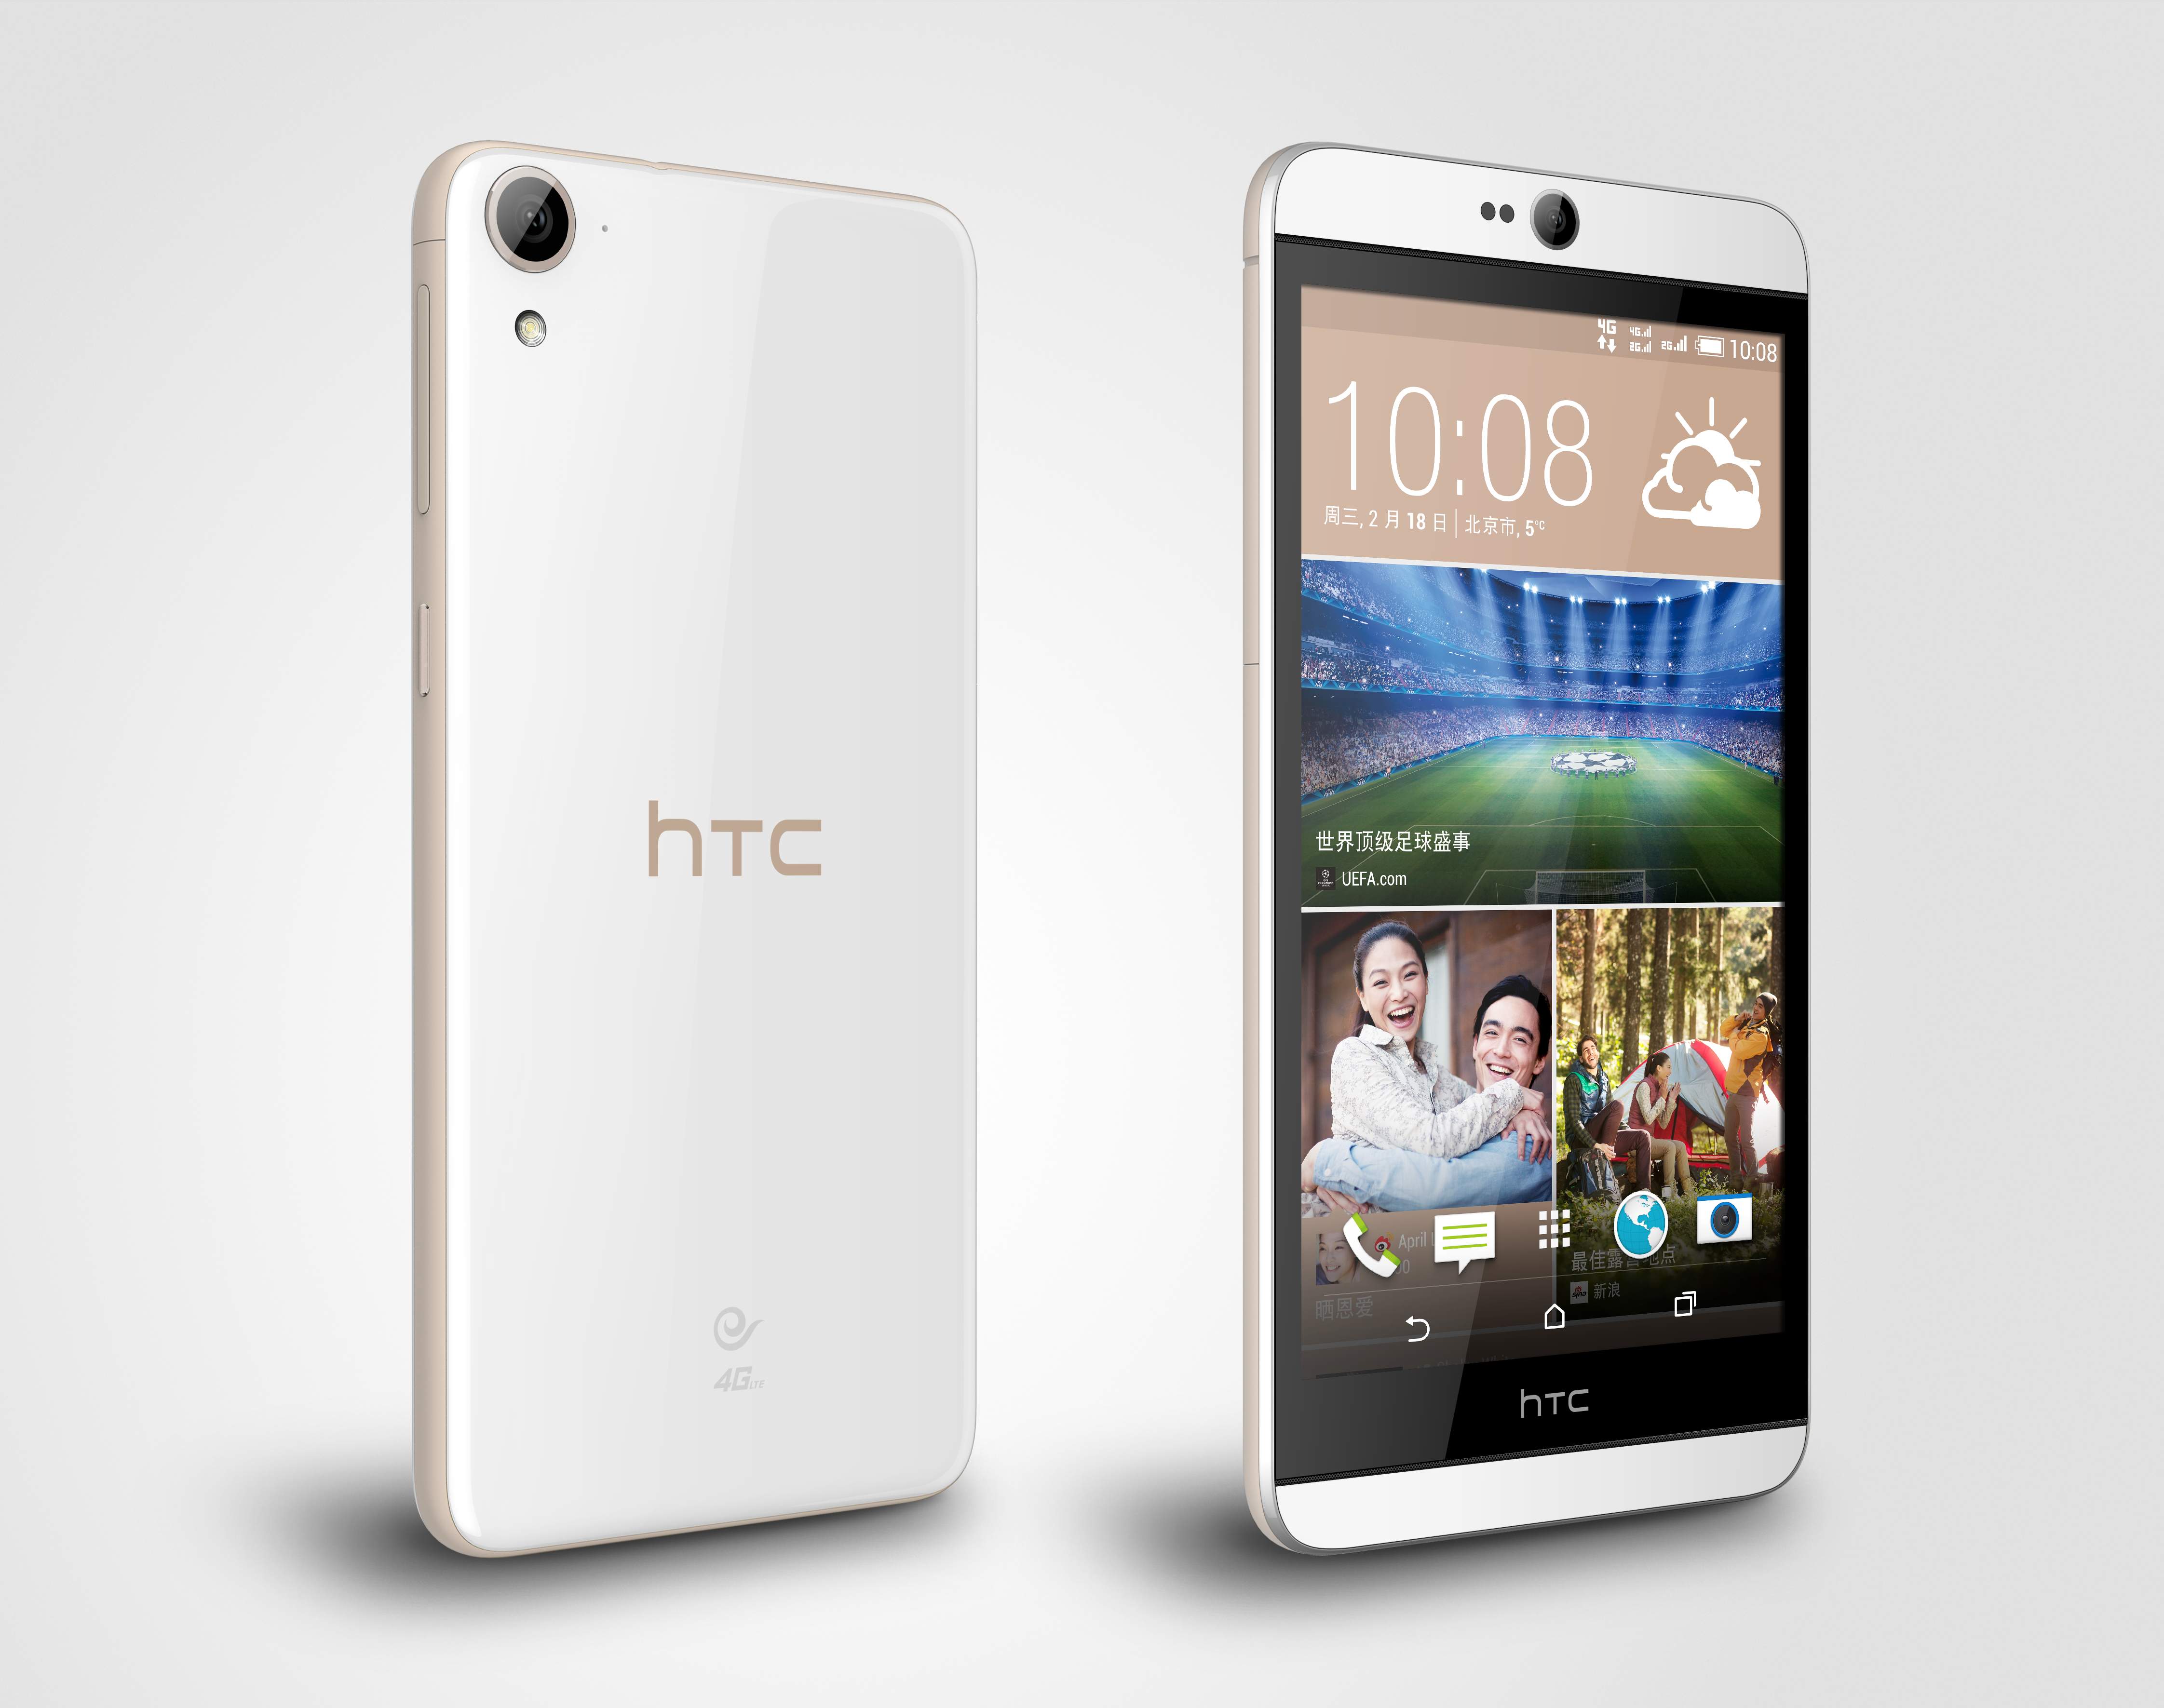 HTC Desire phone